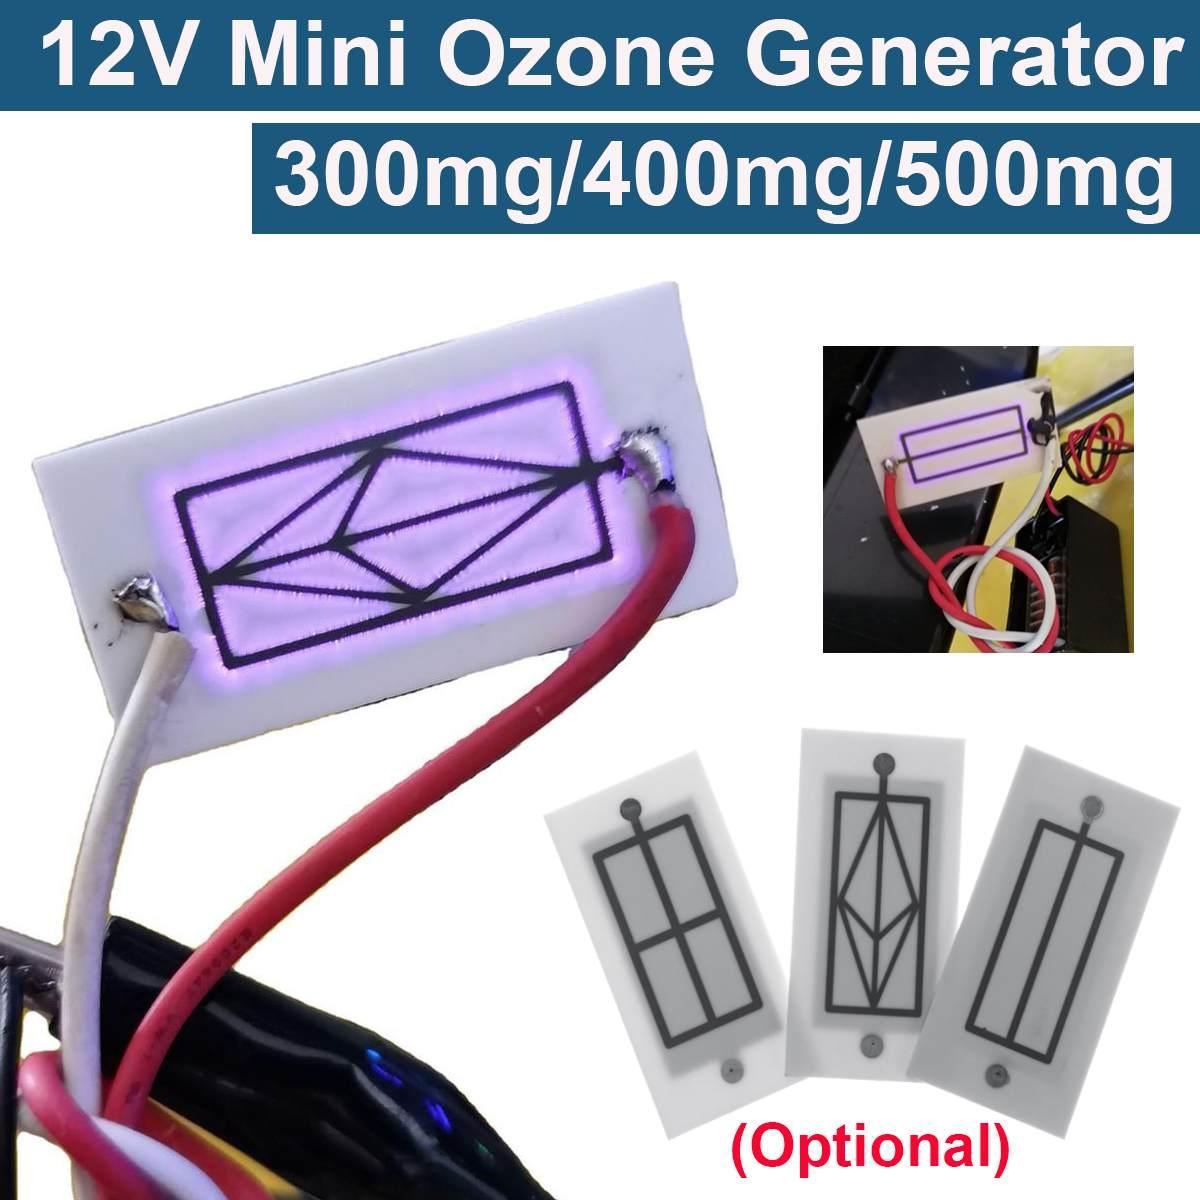 Изображение товара: 1Pcs 12V Mini Ozone Generator Integrated Ceramic Plate Ozonizer Air Water Cleaner Sterilizer Air Purifier Parts 300/400/500mg